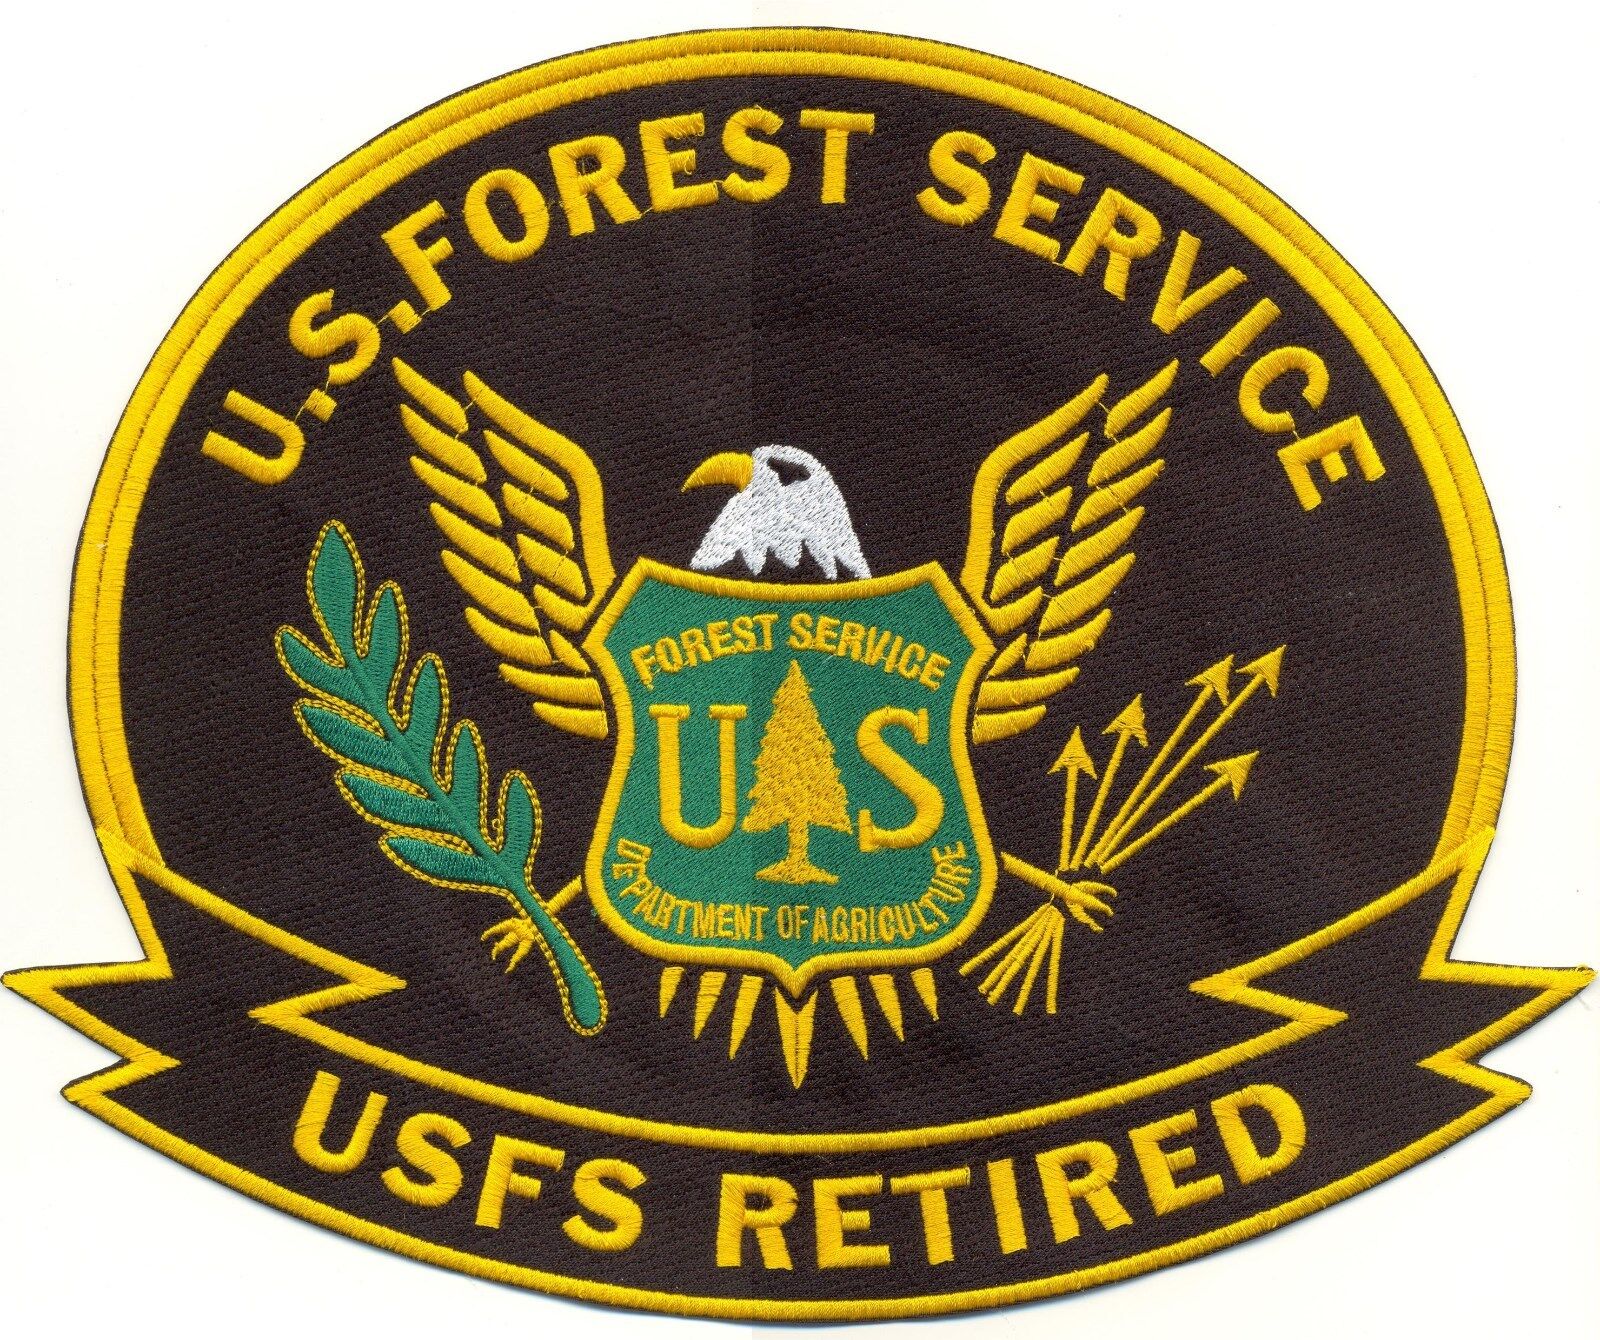 Hot Shot USFS Wildland Firefighter, Smokejumper Retired US Forest Service 8 X 10